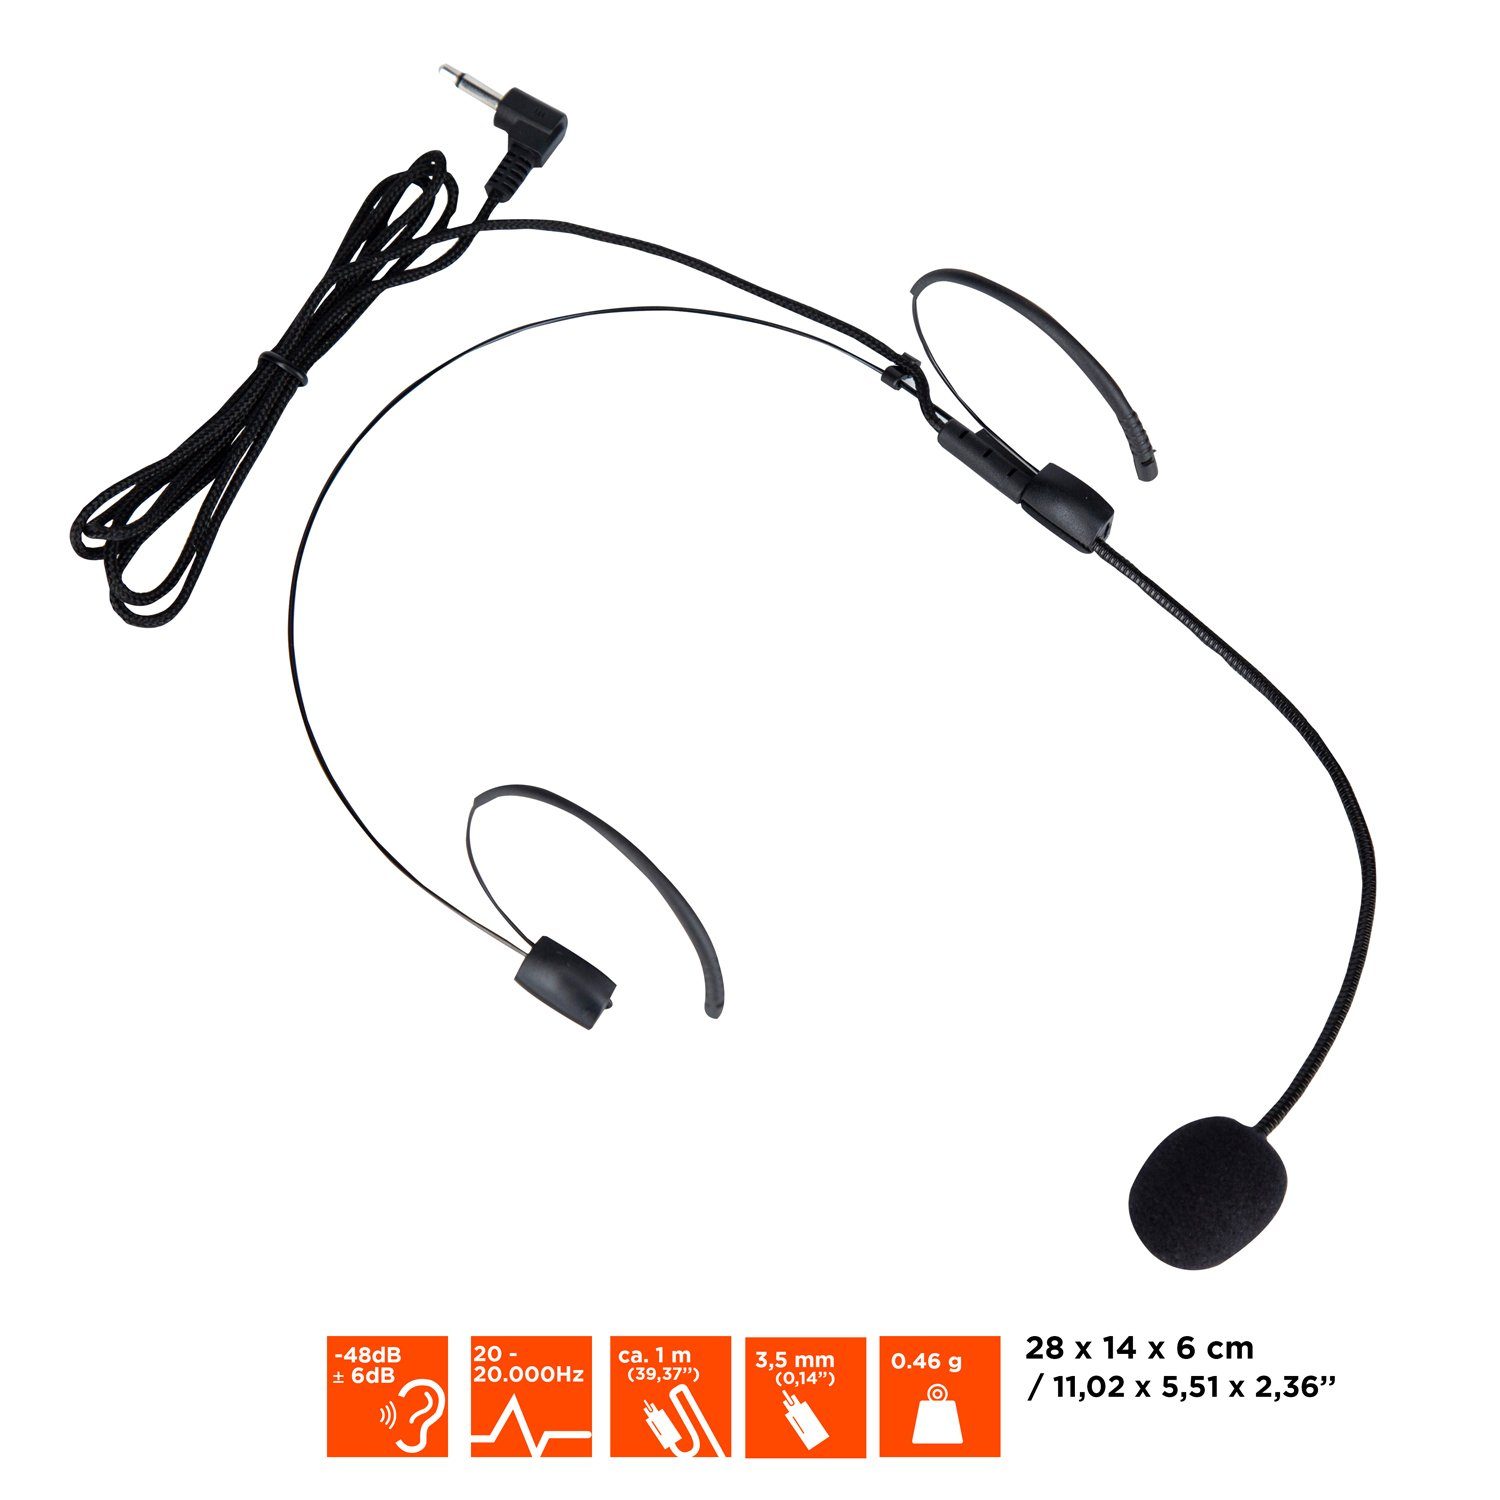 Headset Windschutzaufsatz, mit Voice Professional 3,5mm Celexon Klinke) Booster Headset (Mikrofon